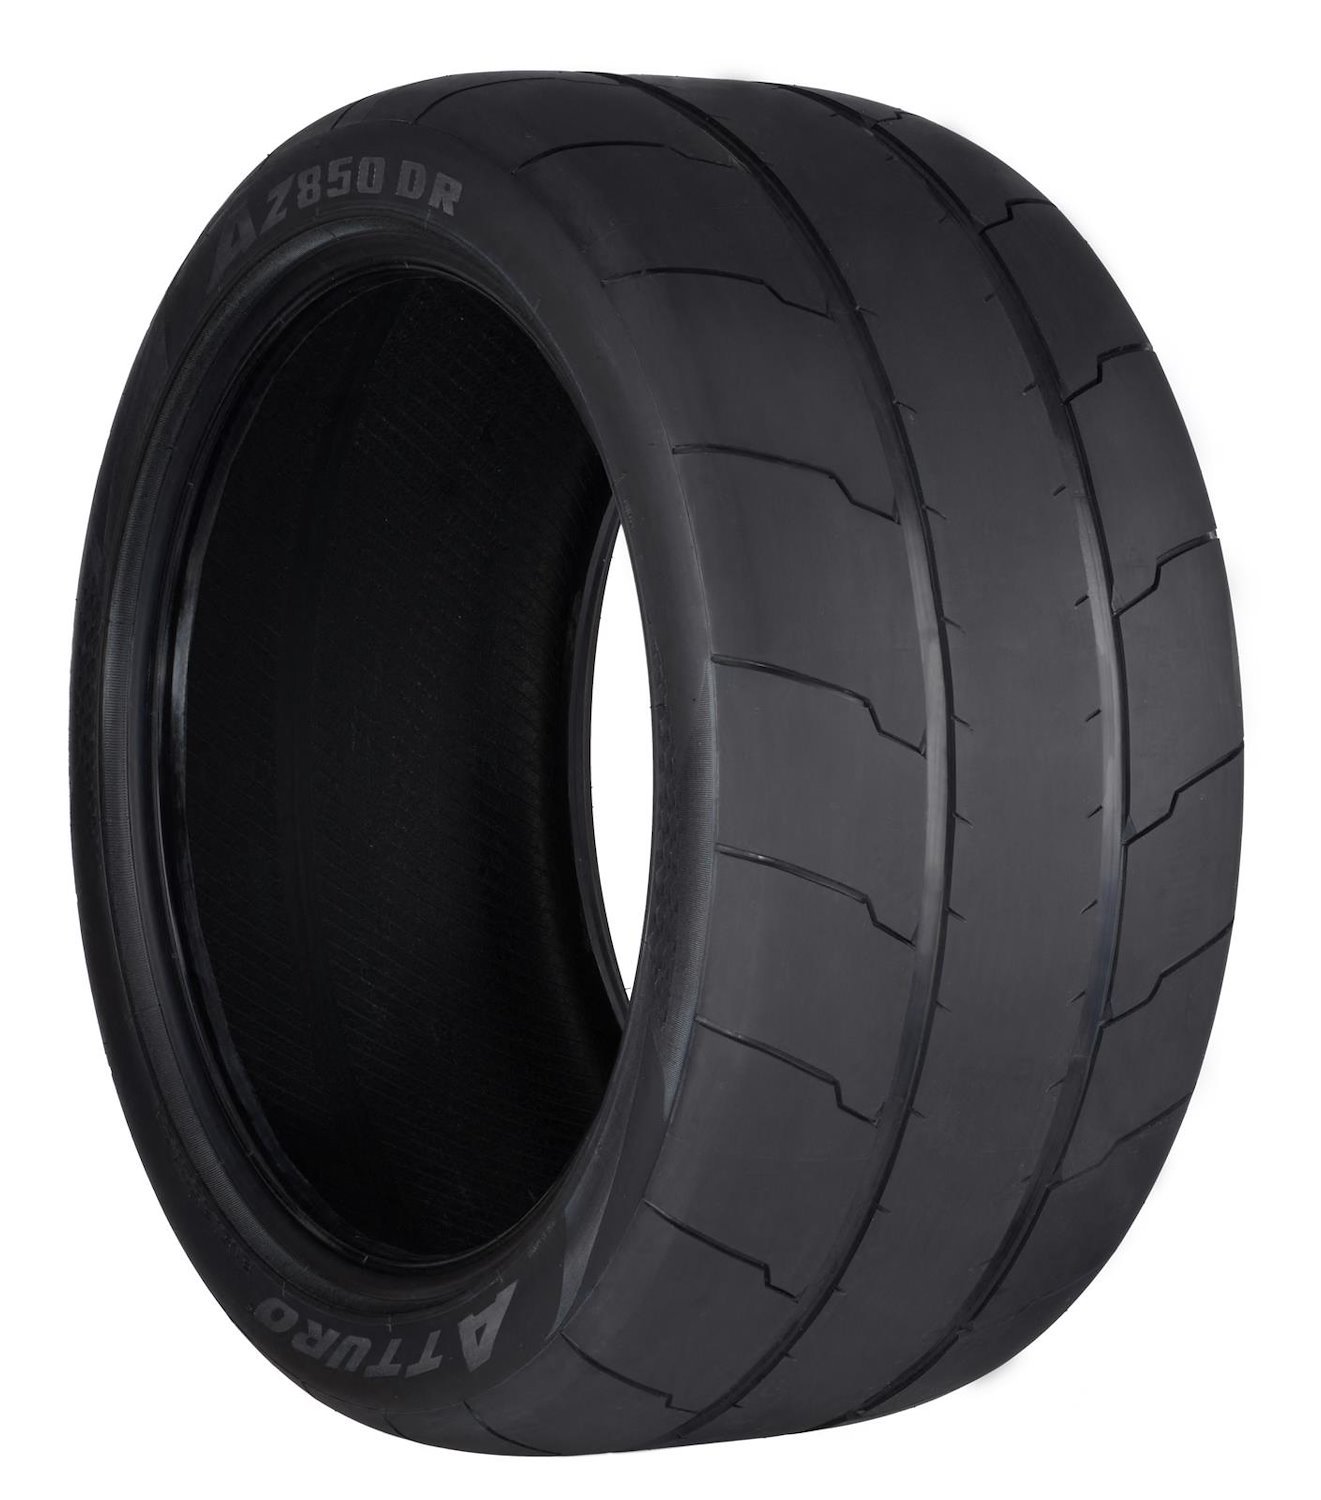 AZ 850 DR Drag Radial Tire, 305/30R20